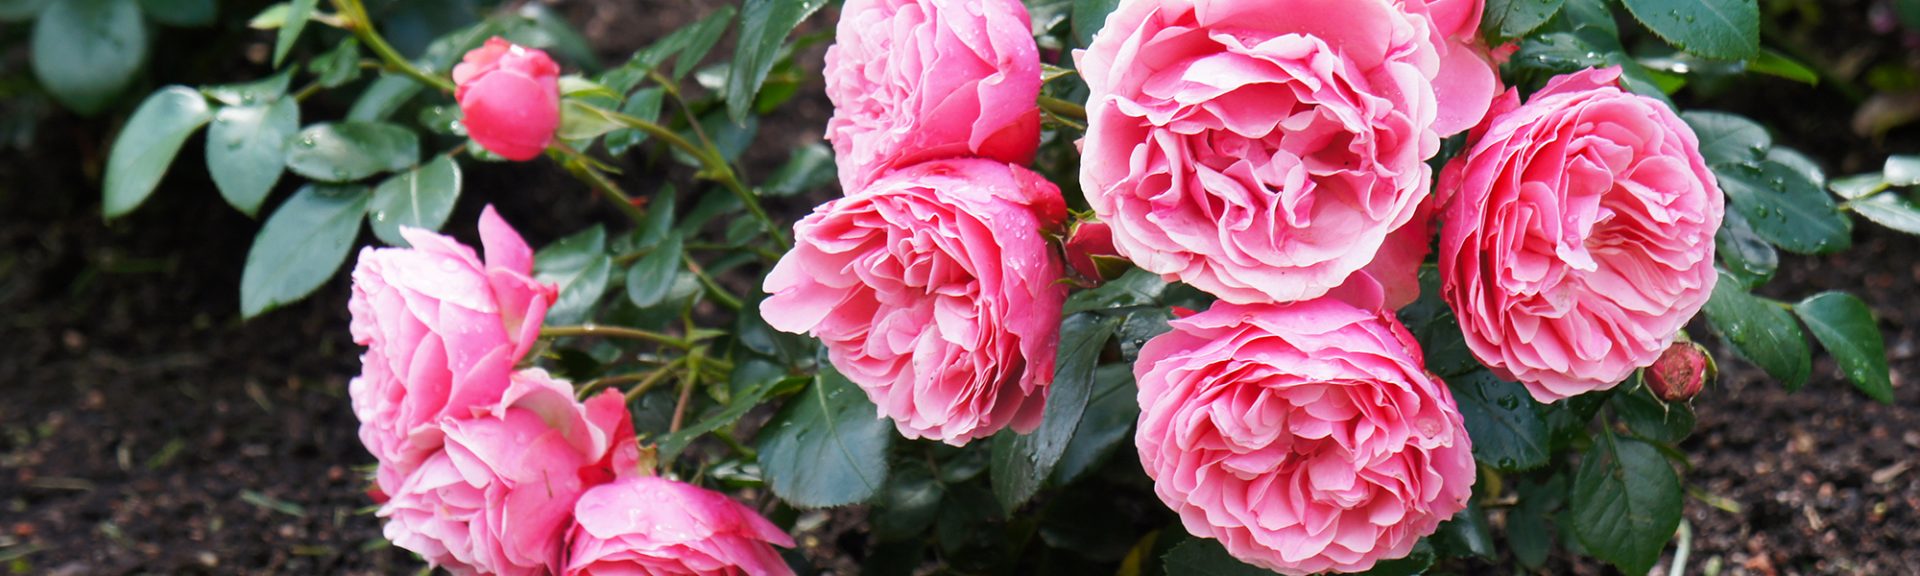 Leonardo da vinci floribunda rosier arbuste de fleurs roses